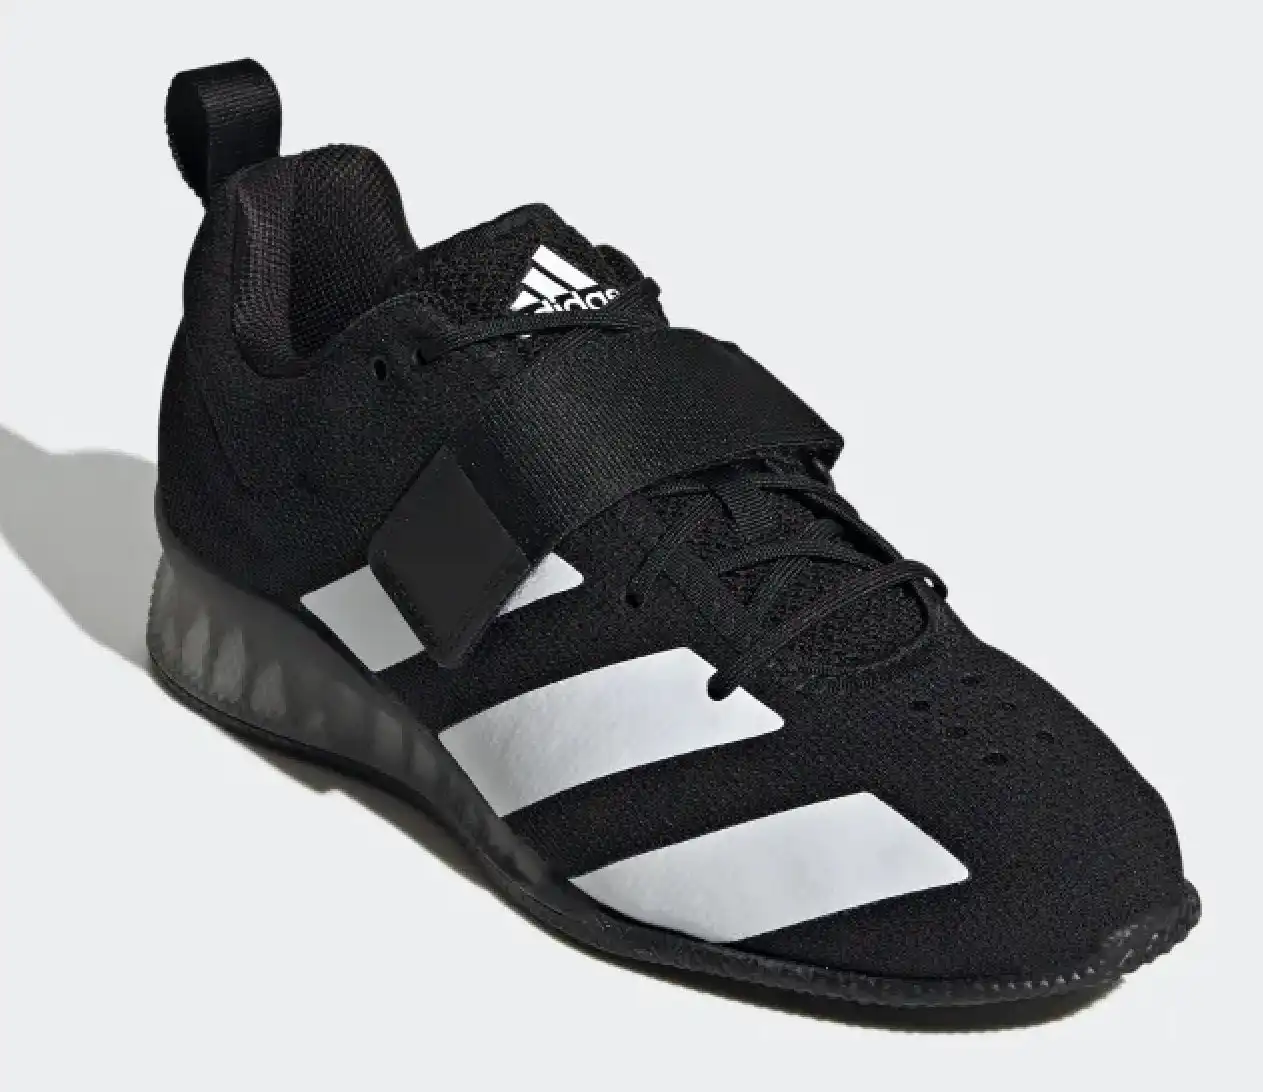 Adidas Men's Adipower Weightlifting II Training Runners Shoes - Black/White